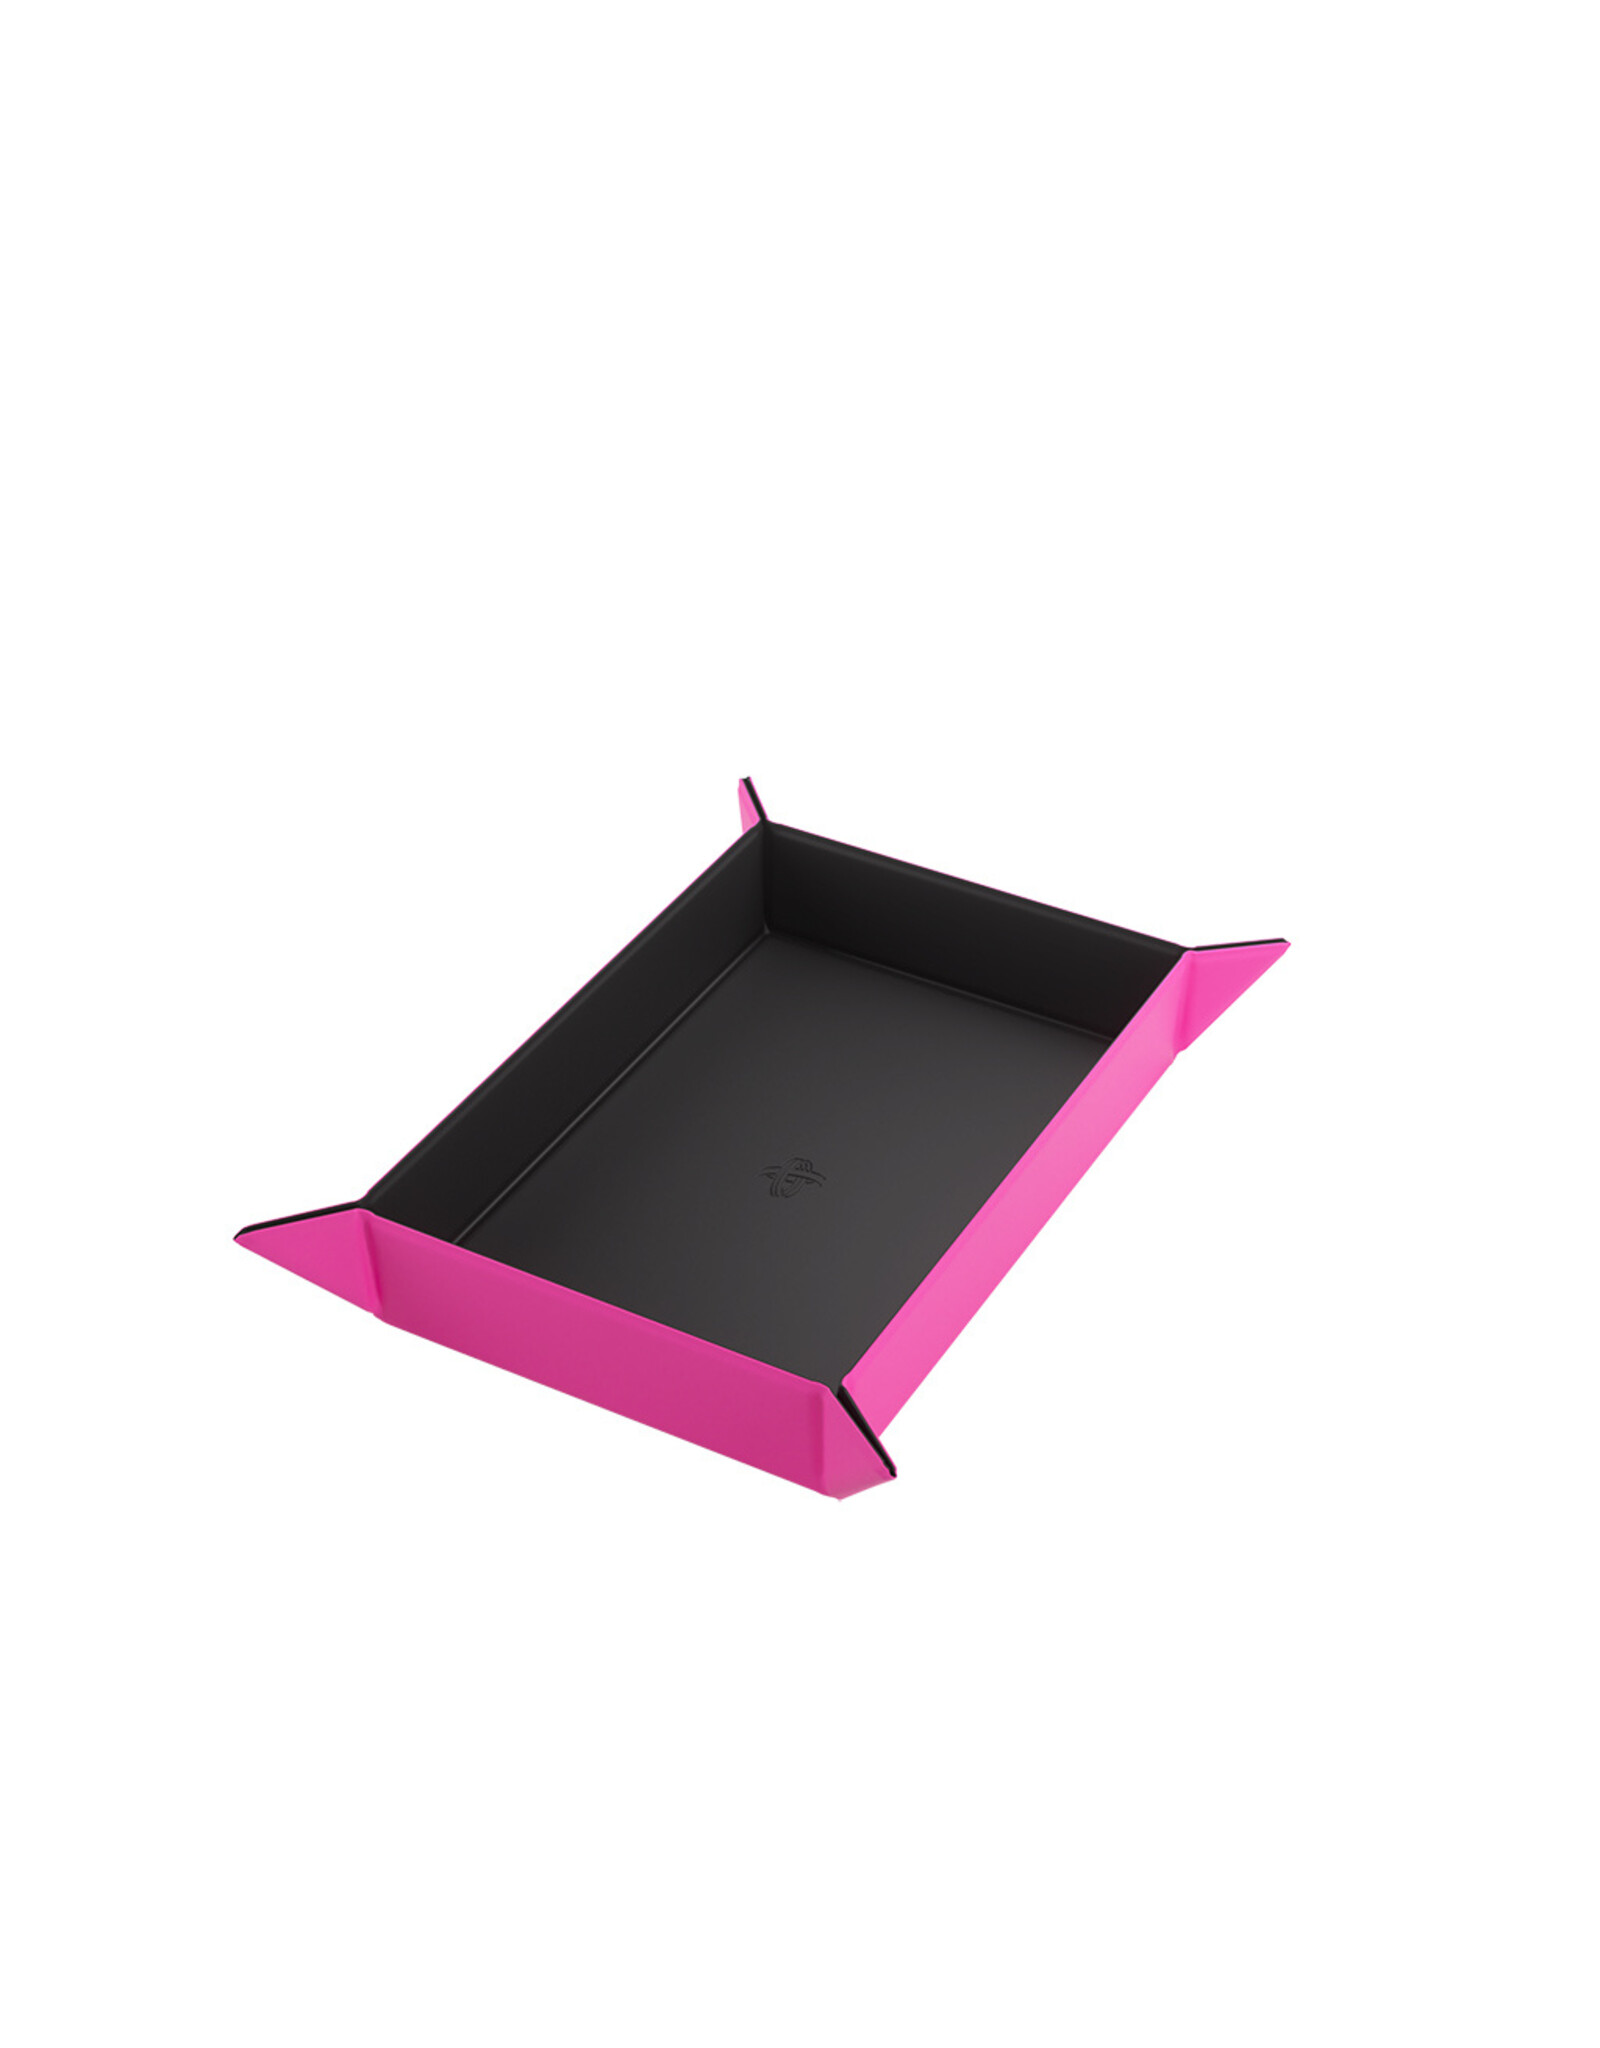 GameGenic Magnetic Dice Tray Rectangular Black/Pink